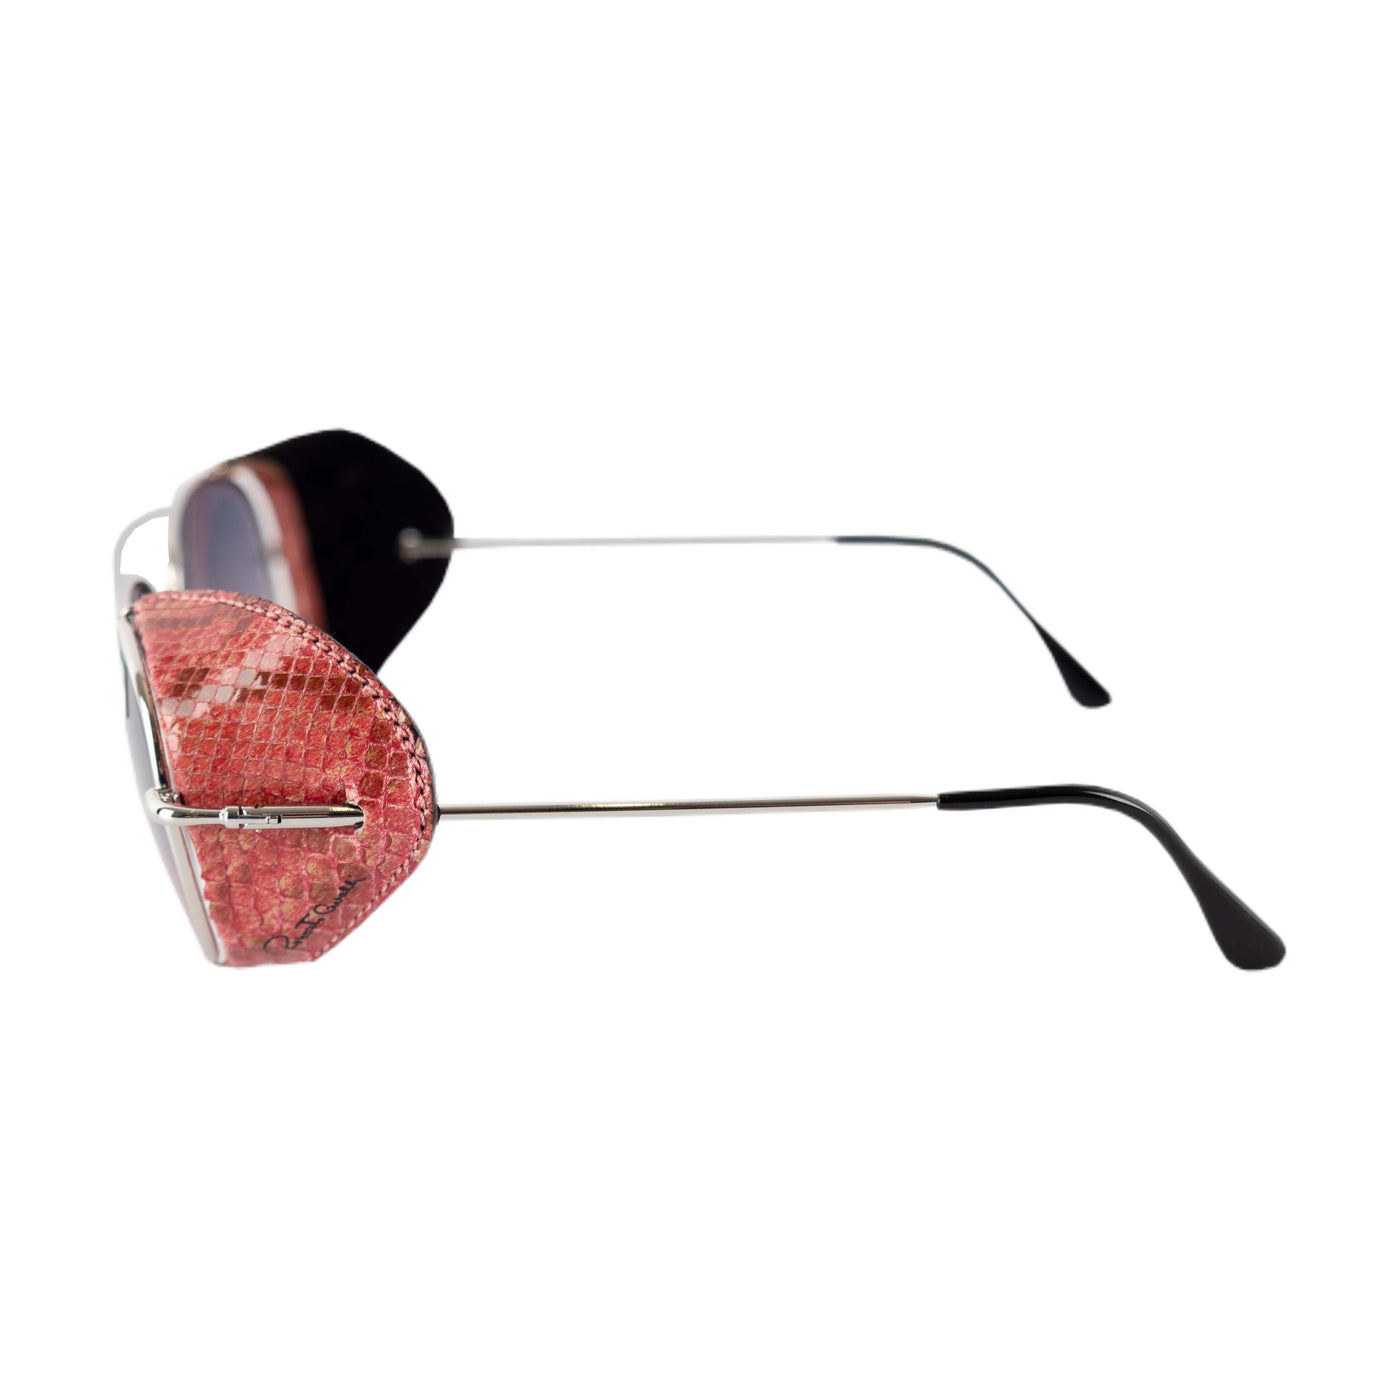 Second hand Roberto Cavalli Aviator Snakeskin Sunglasses